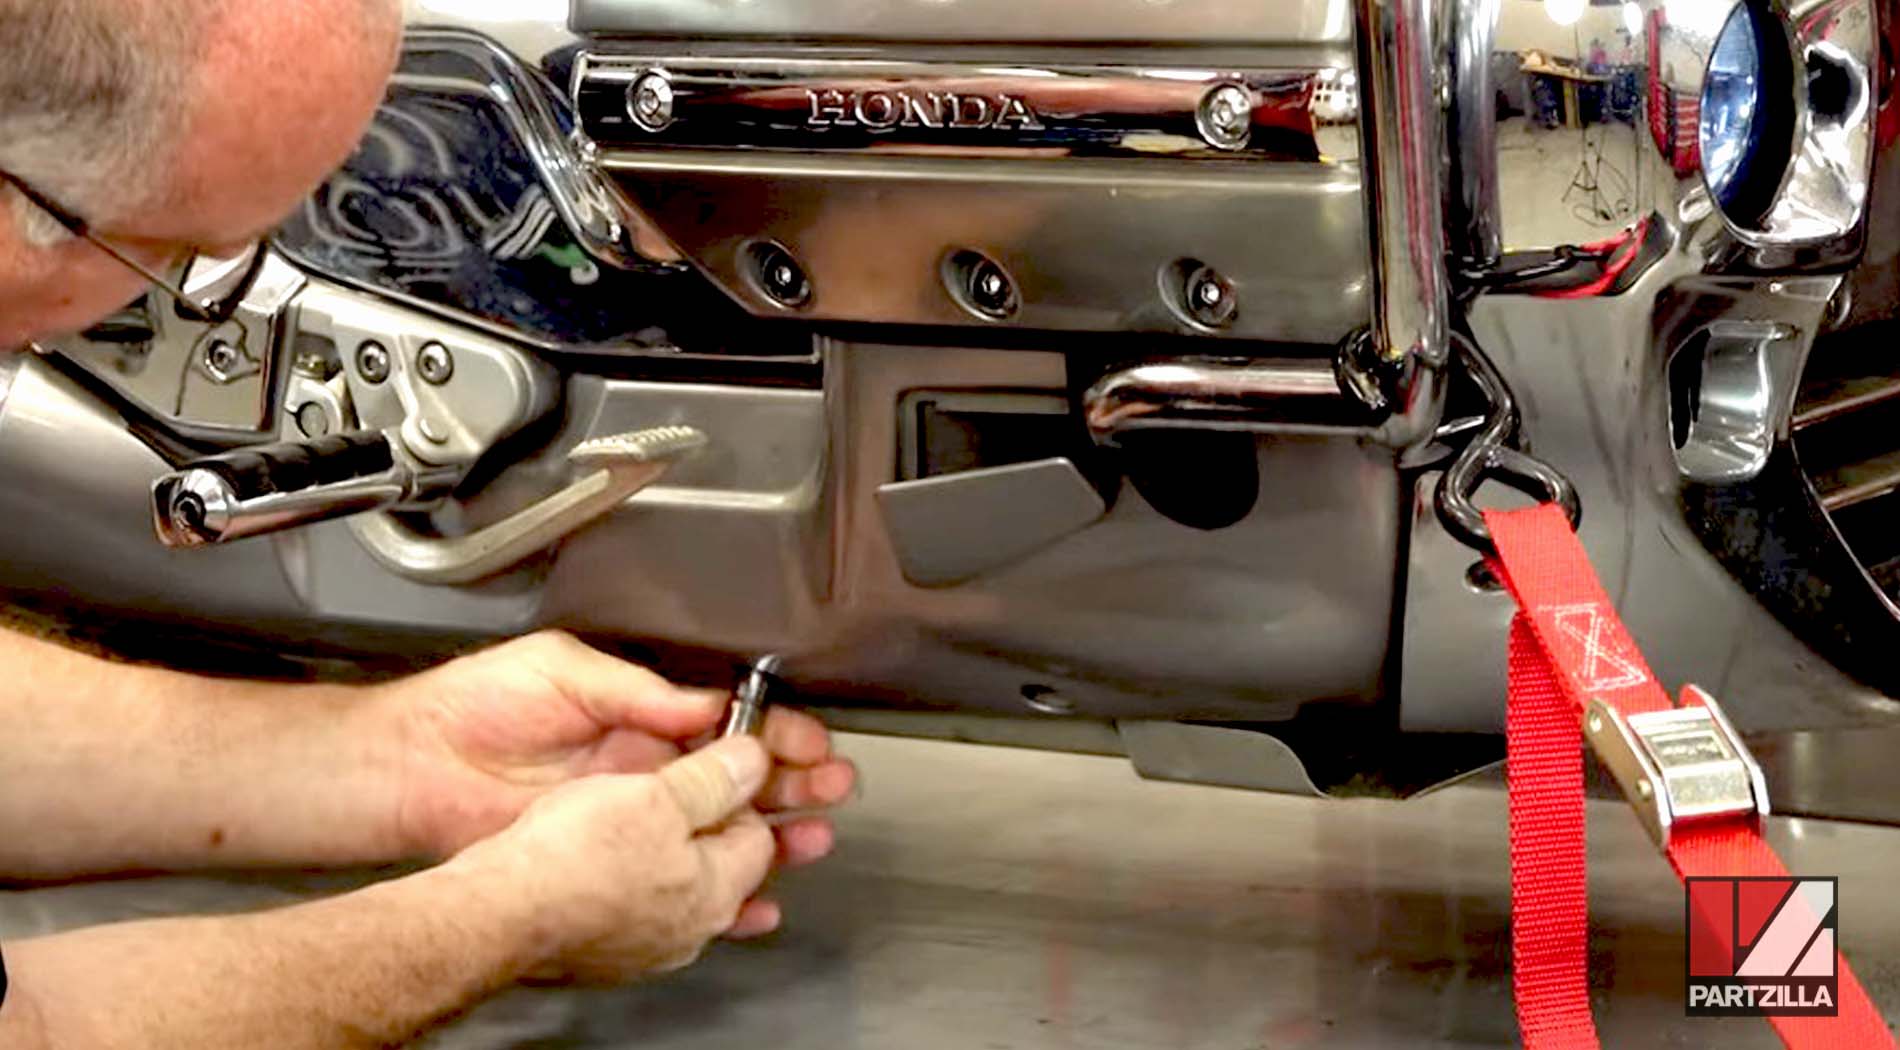 Honda Goldwing skid plate removal